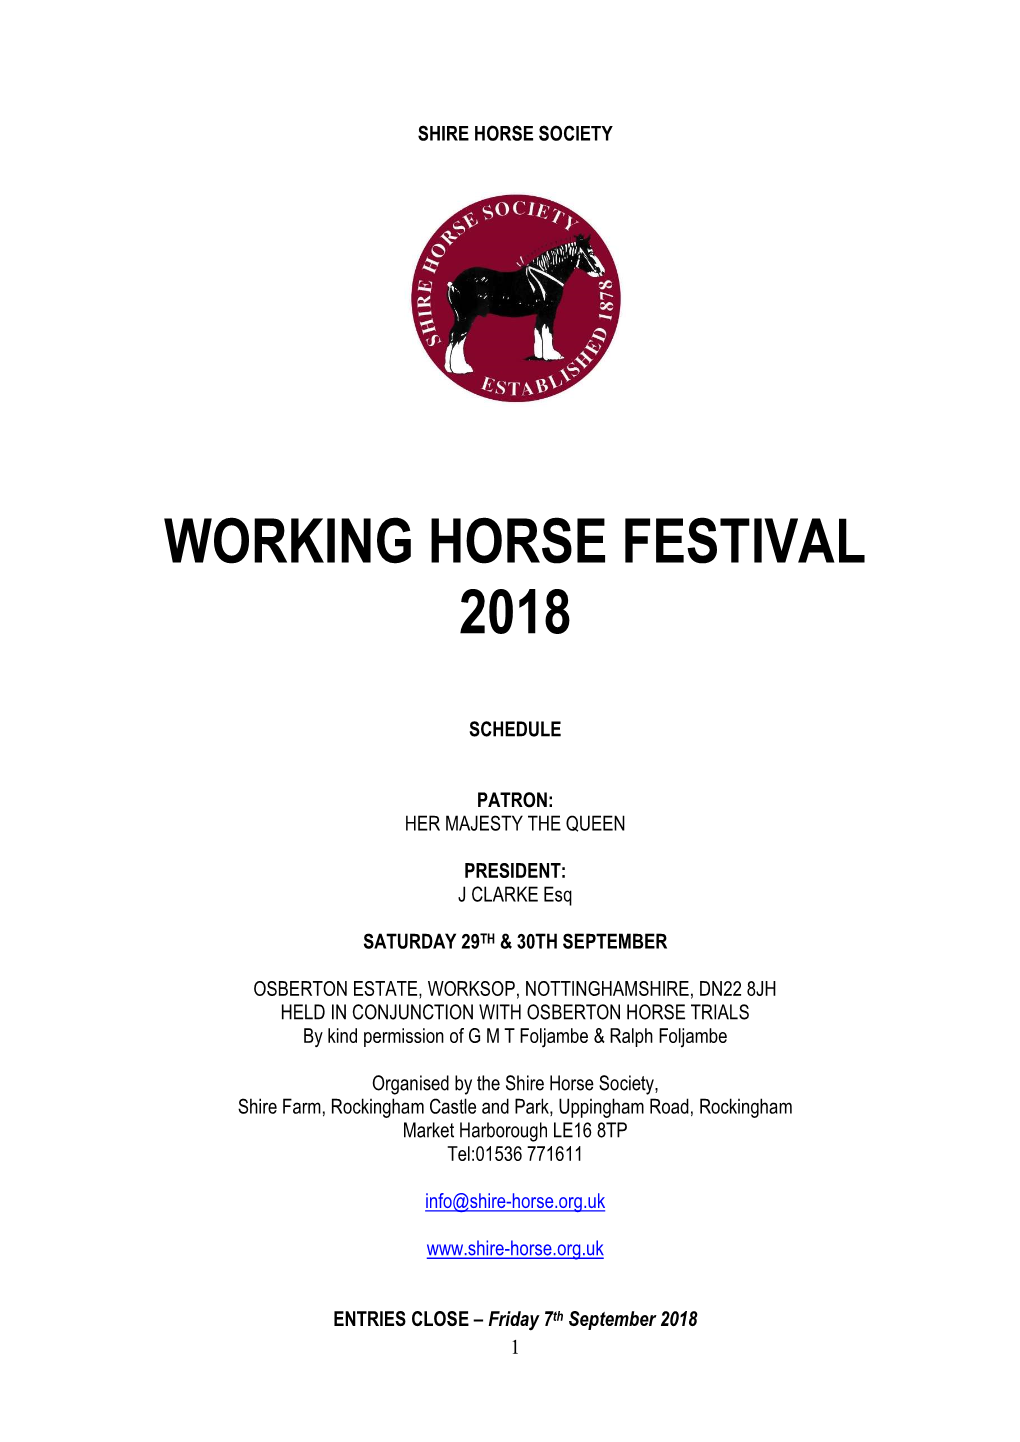 Working Horse Festival 2018